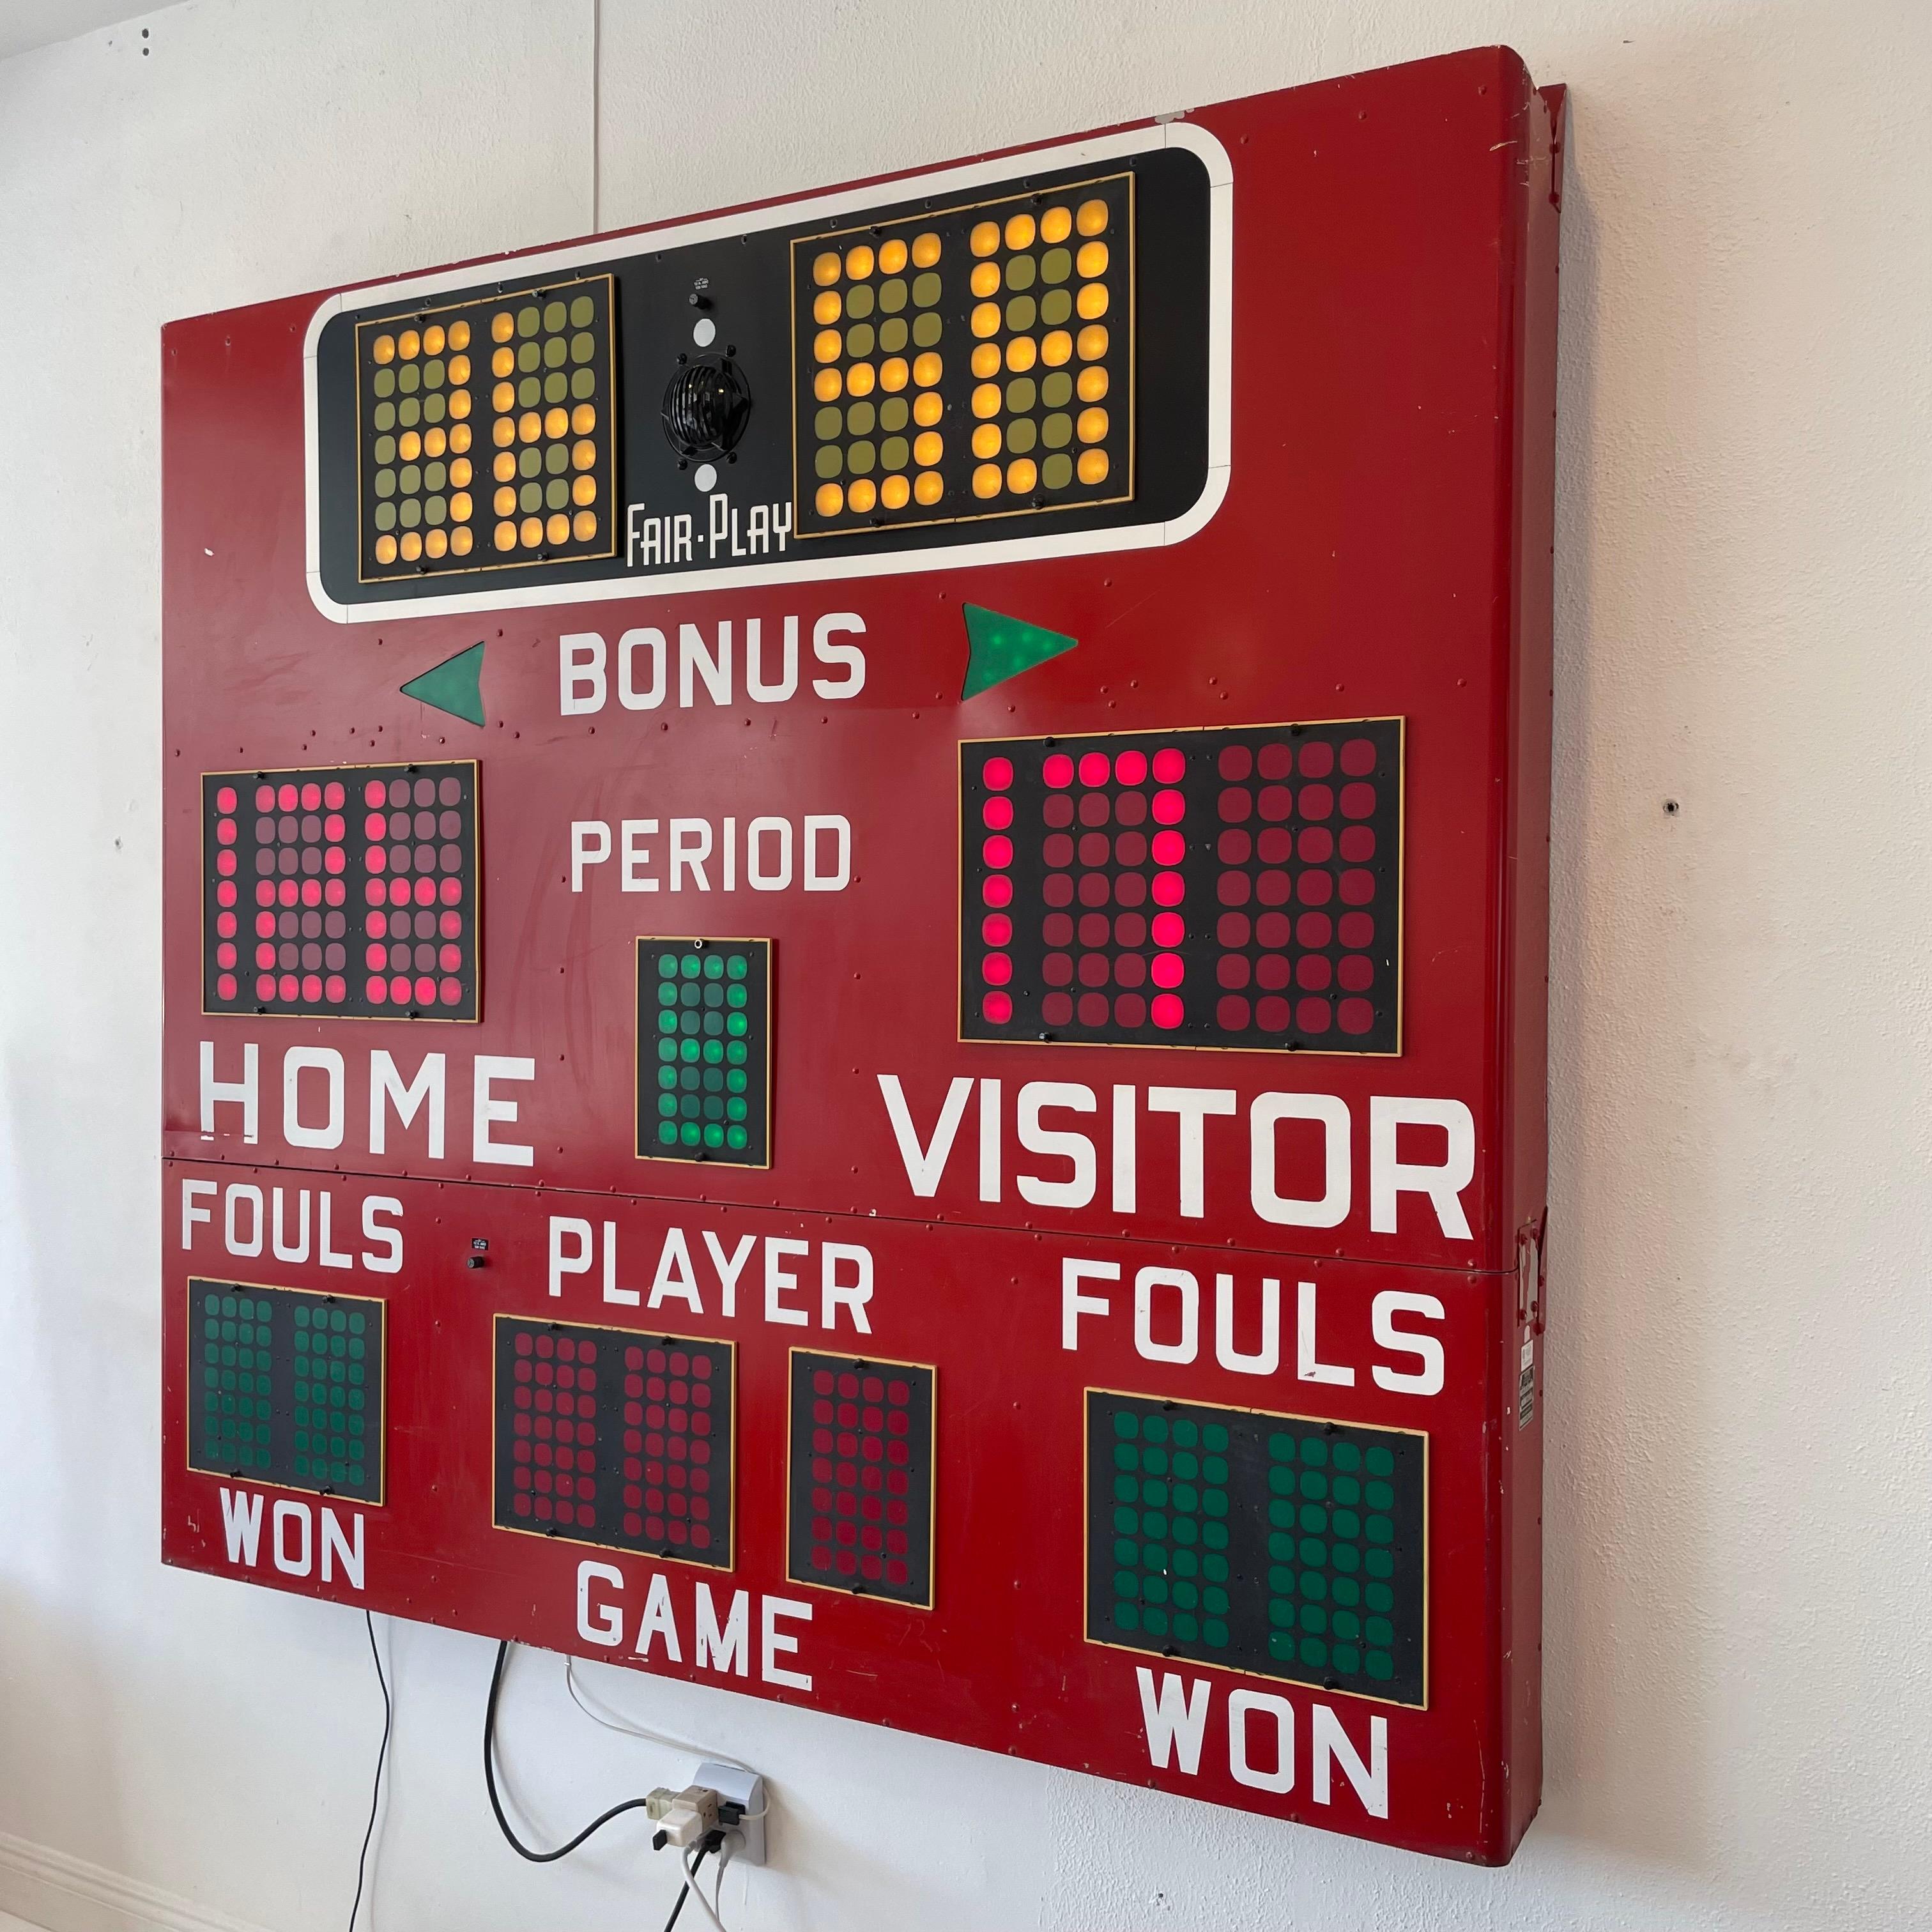 Fair Play Basketball Scoreboard, 1980s 4